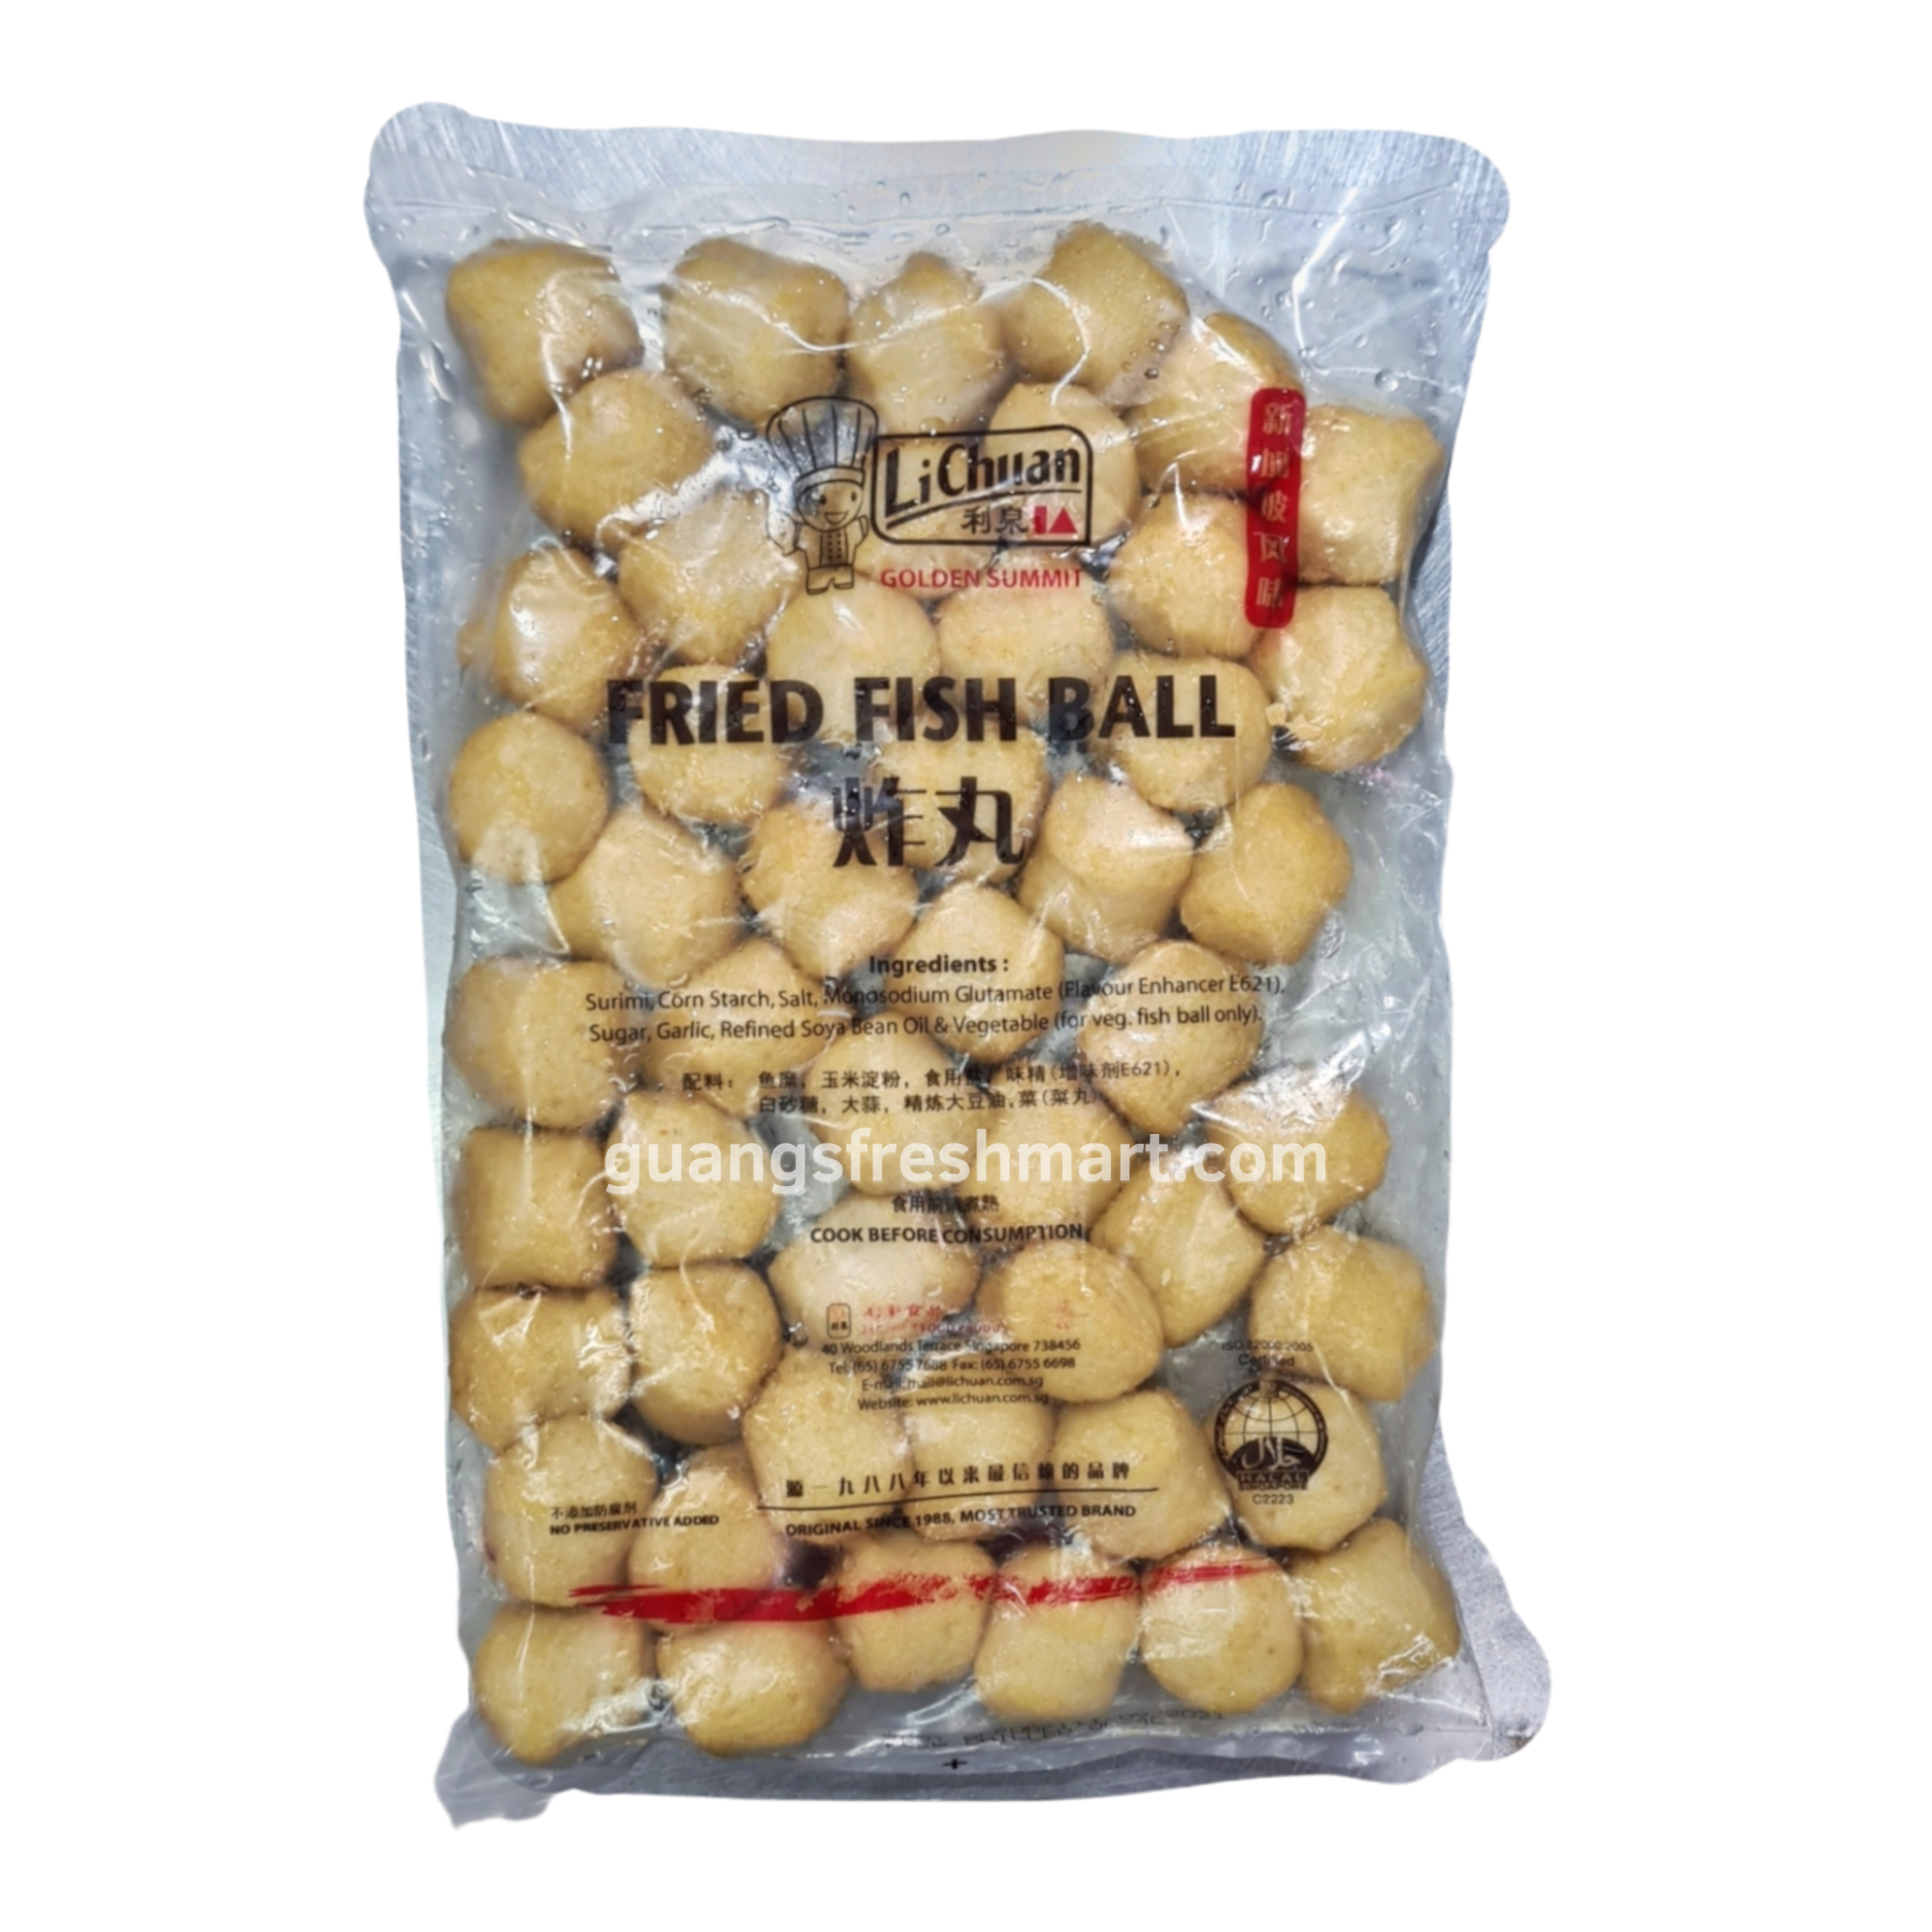 Li Chuan Fried Fish Ball